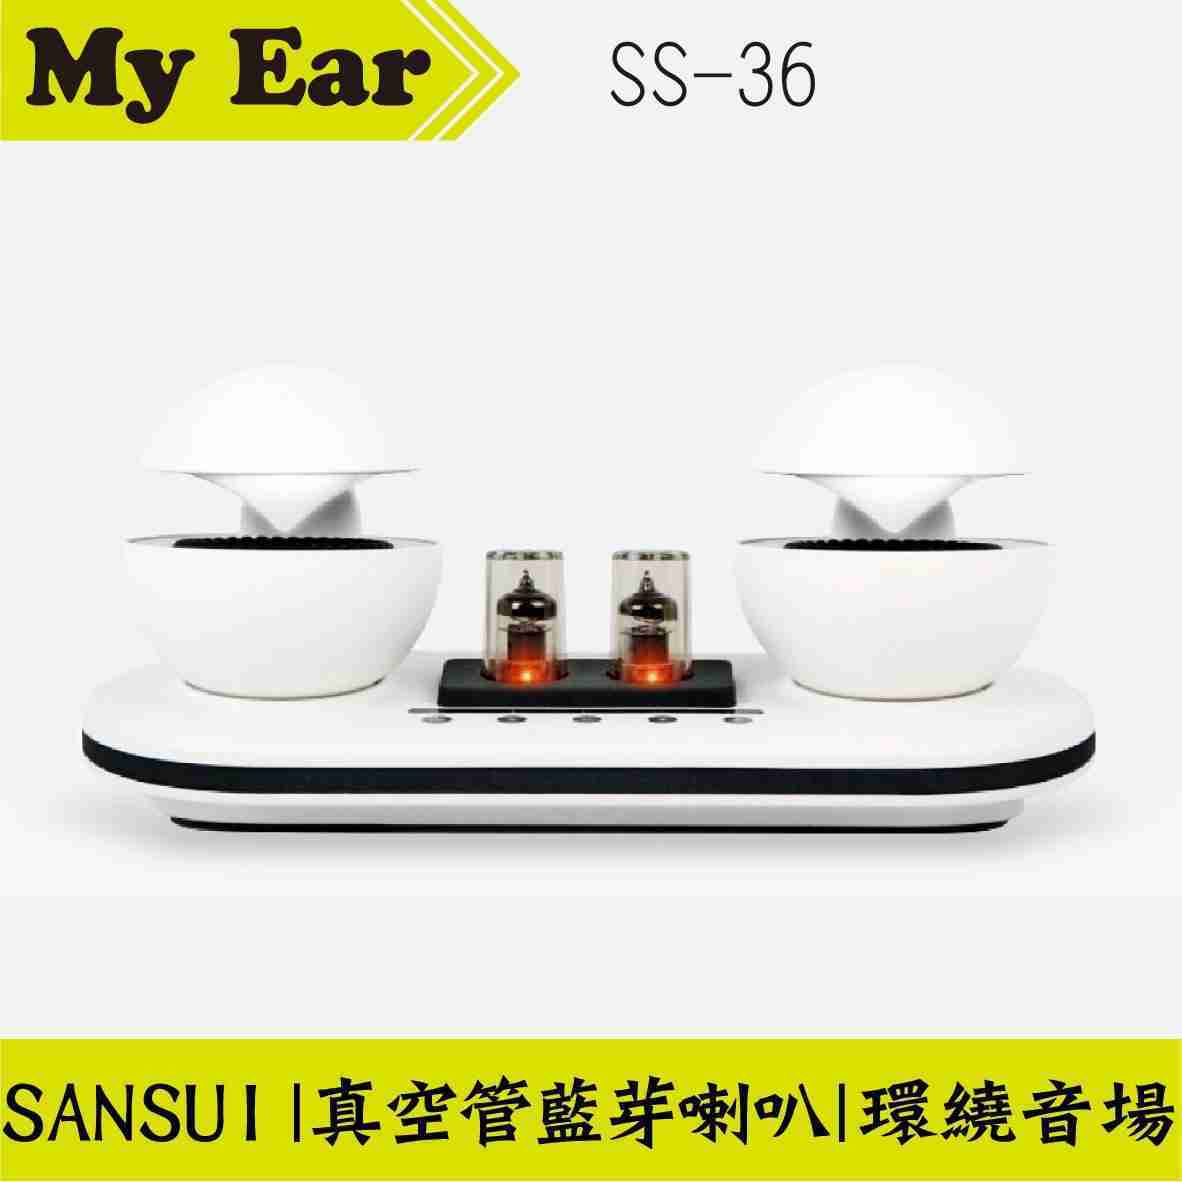 SANSUI SS36 真空管 藍芽 喇叭 360度環繞音場 | My Ear 耳機專門店